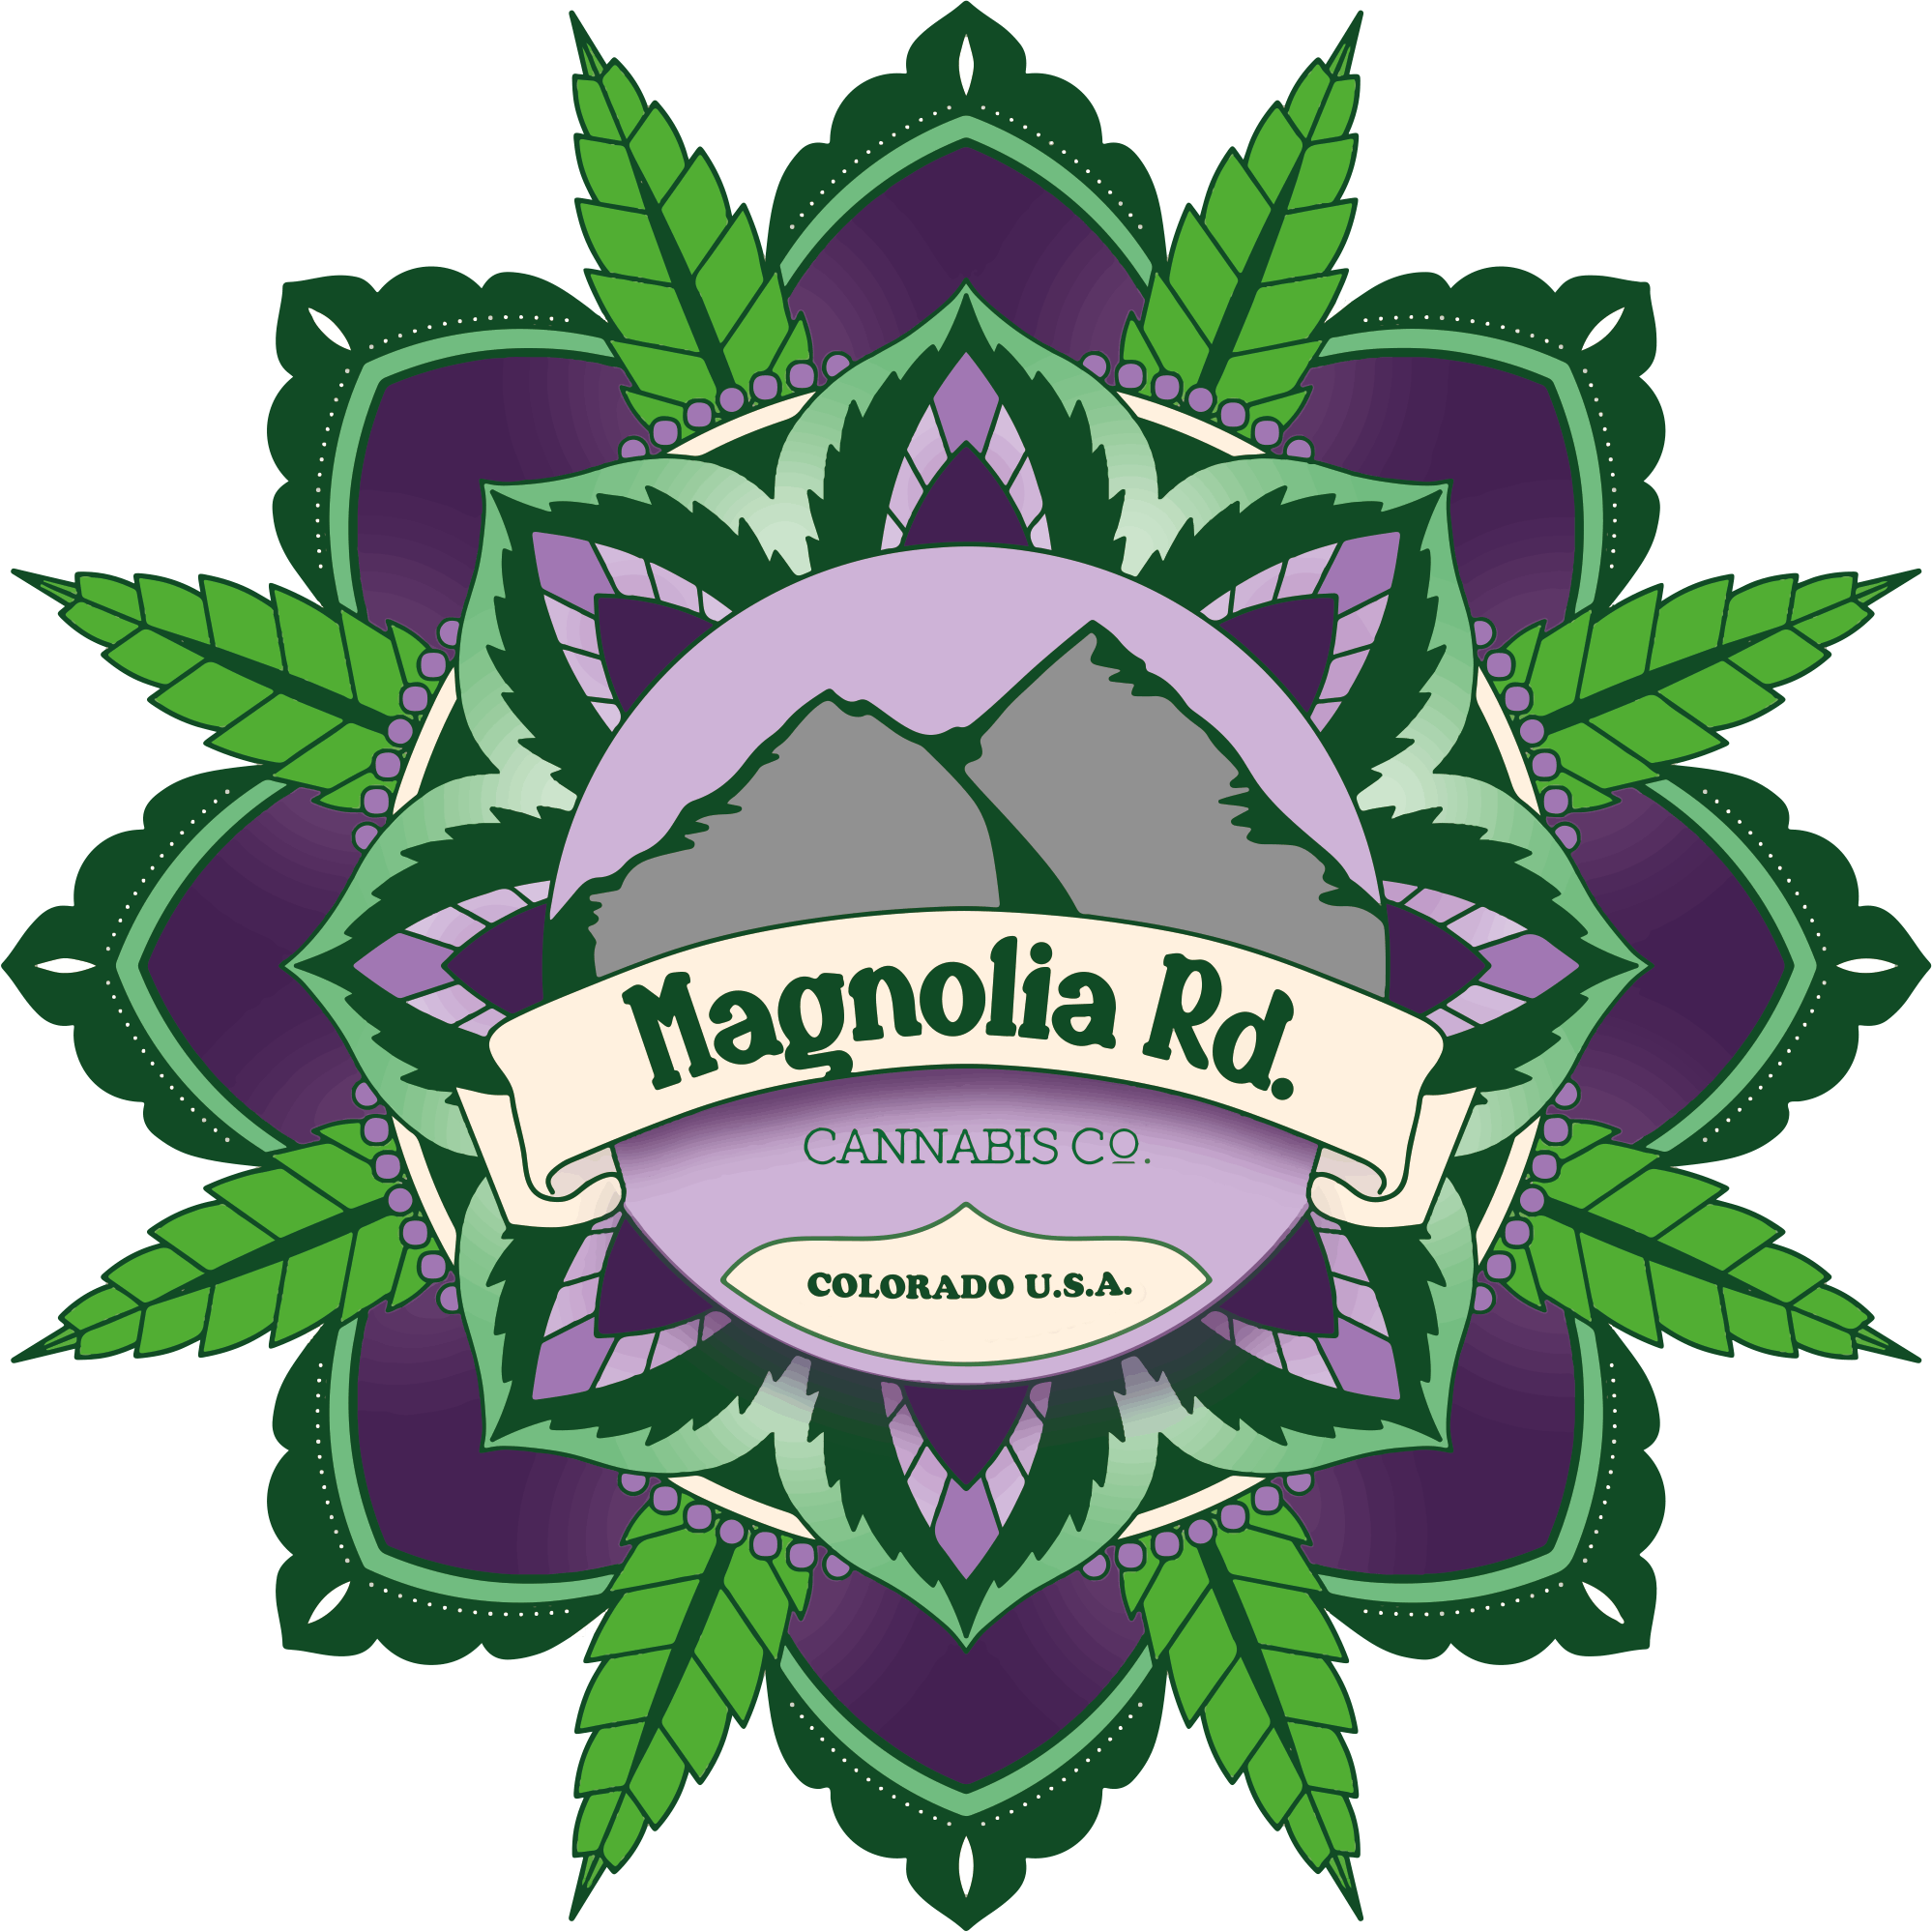 Magnolia Road Cannabis Co. logo